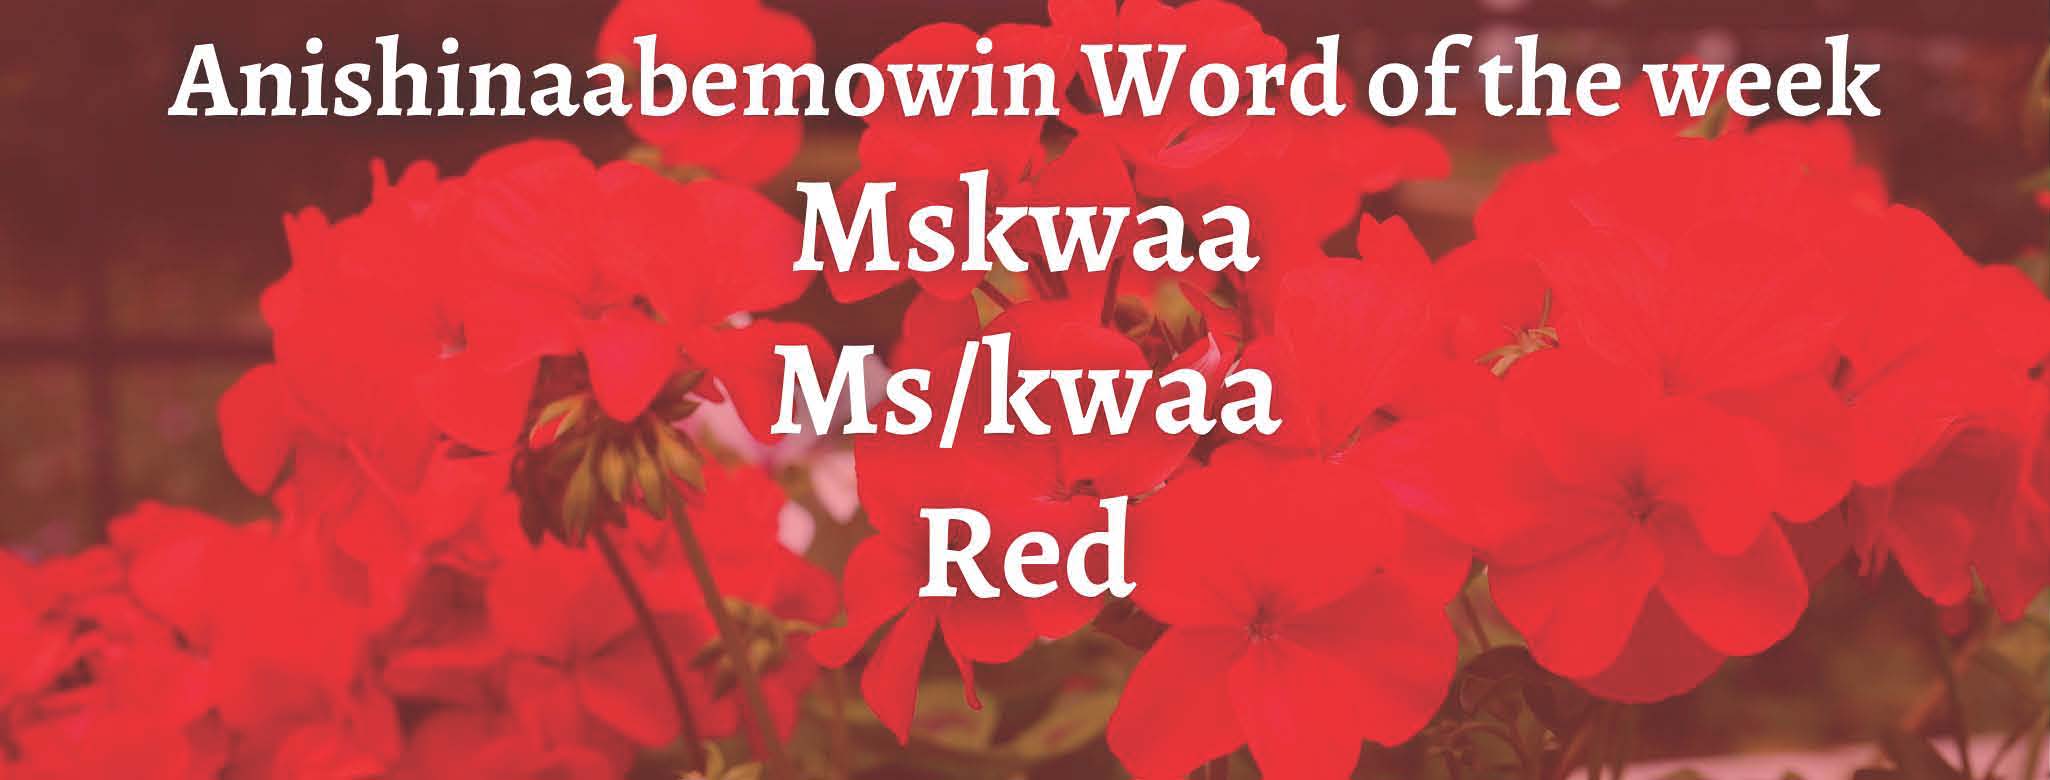 Anishinaabemowin Word of the week Mskwaa Red